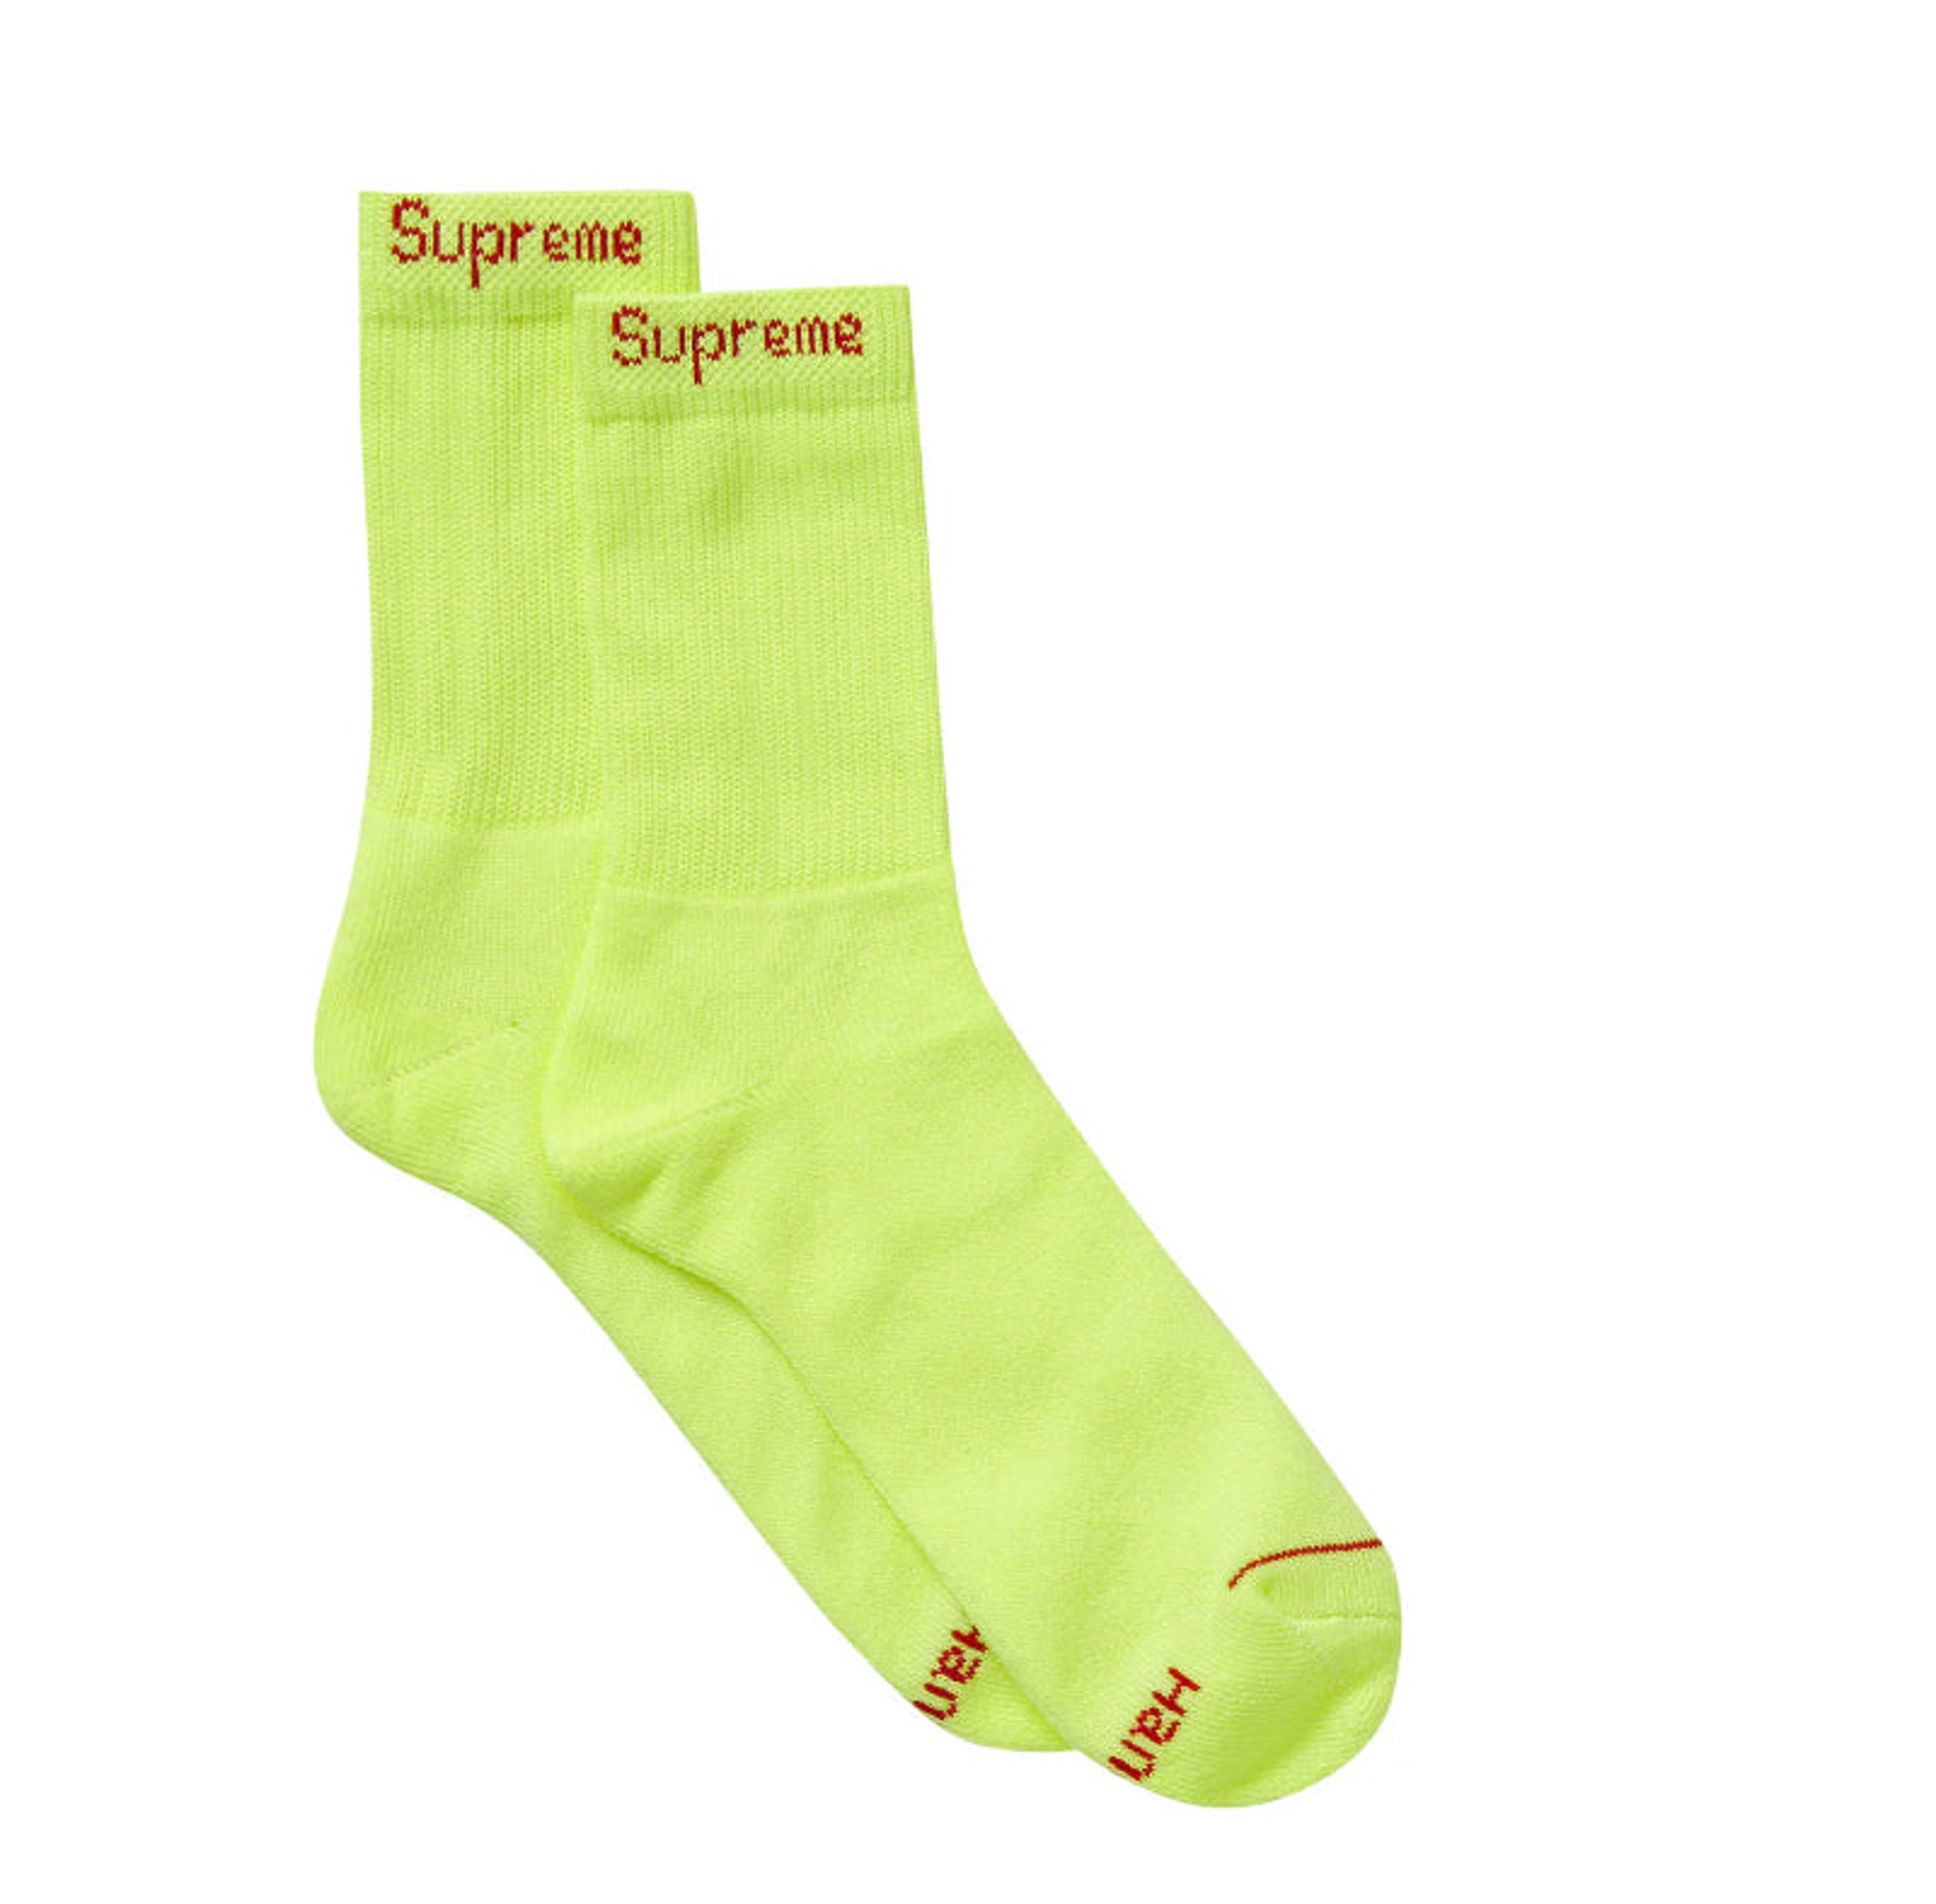 Supreme x Hanes Crew Socks (4 pack)